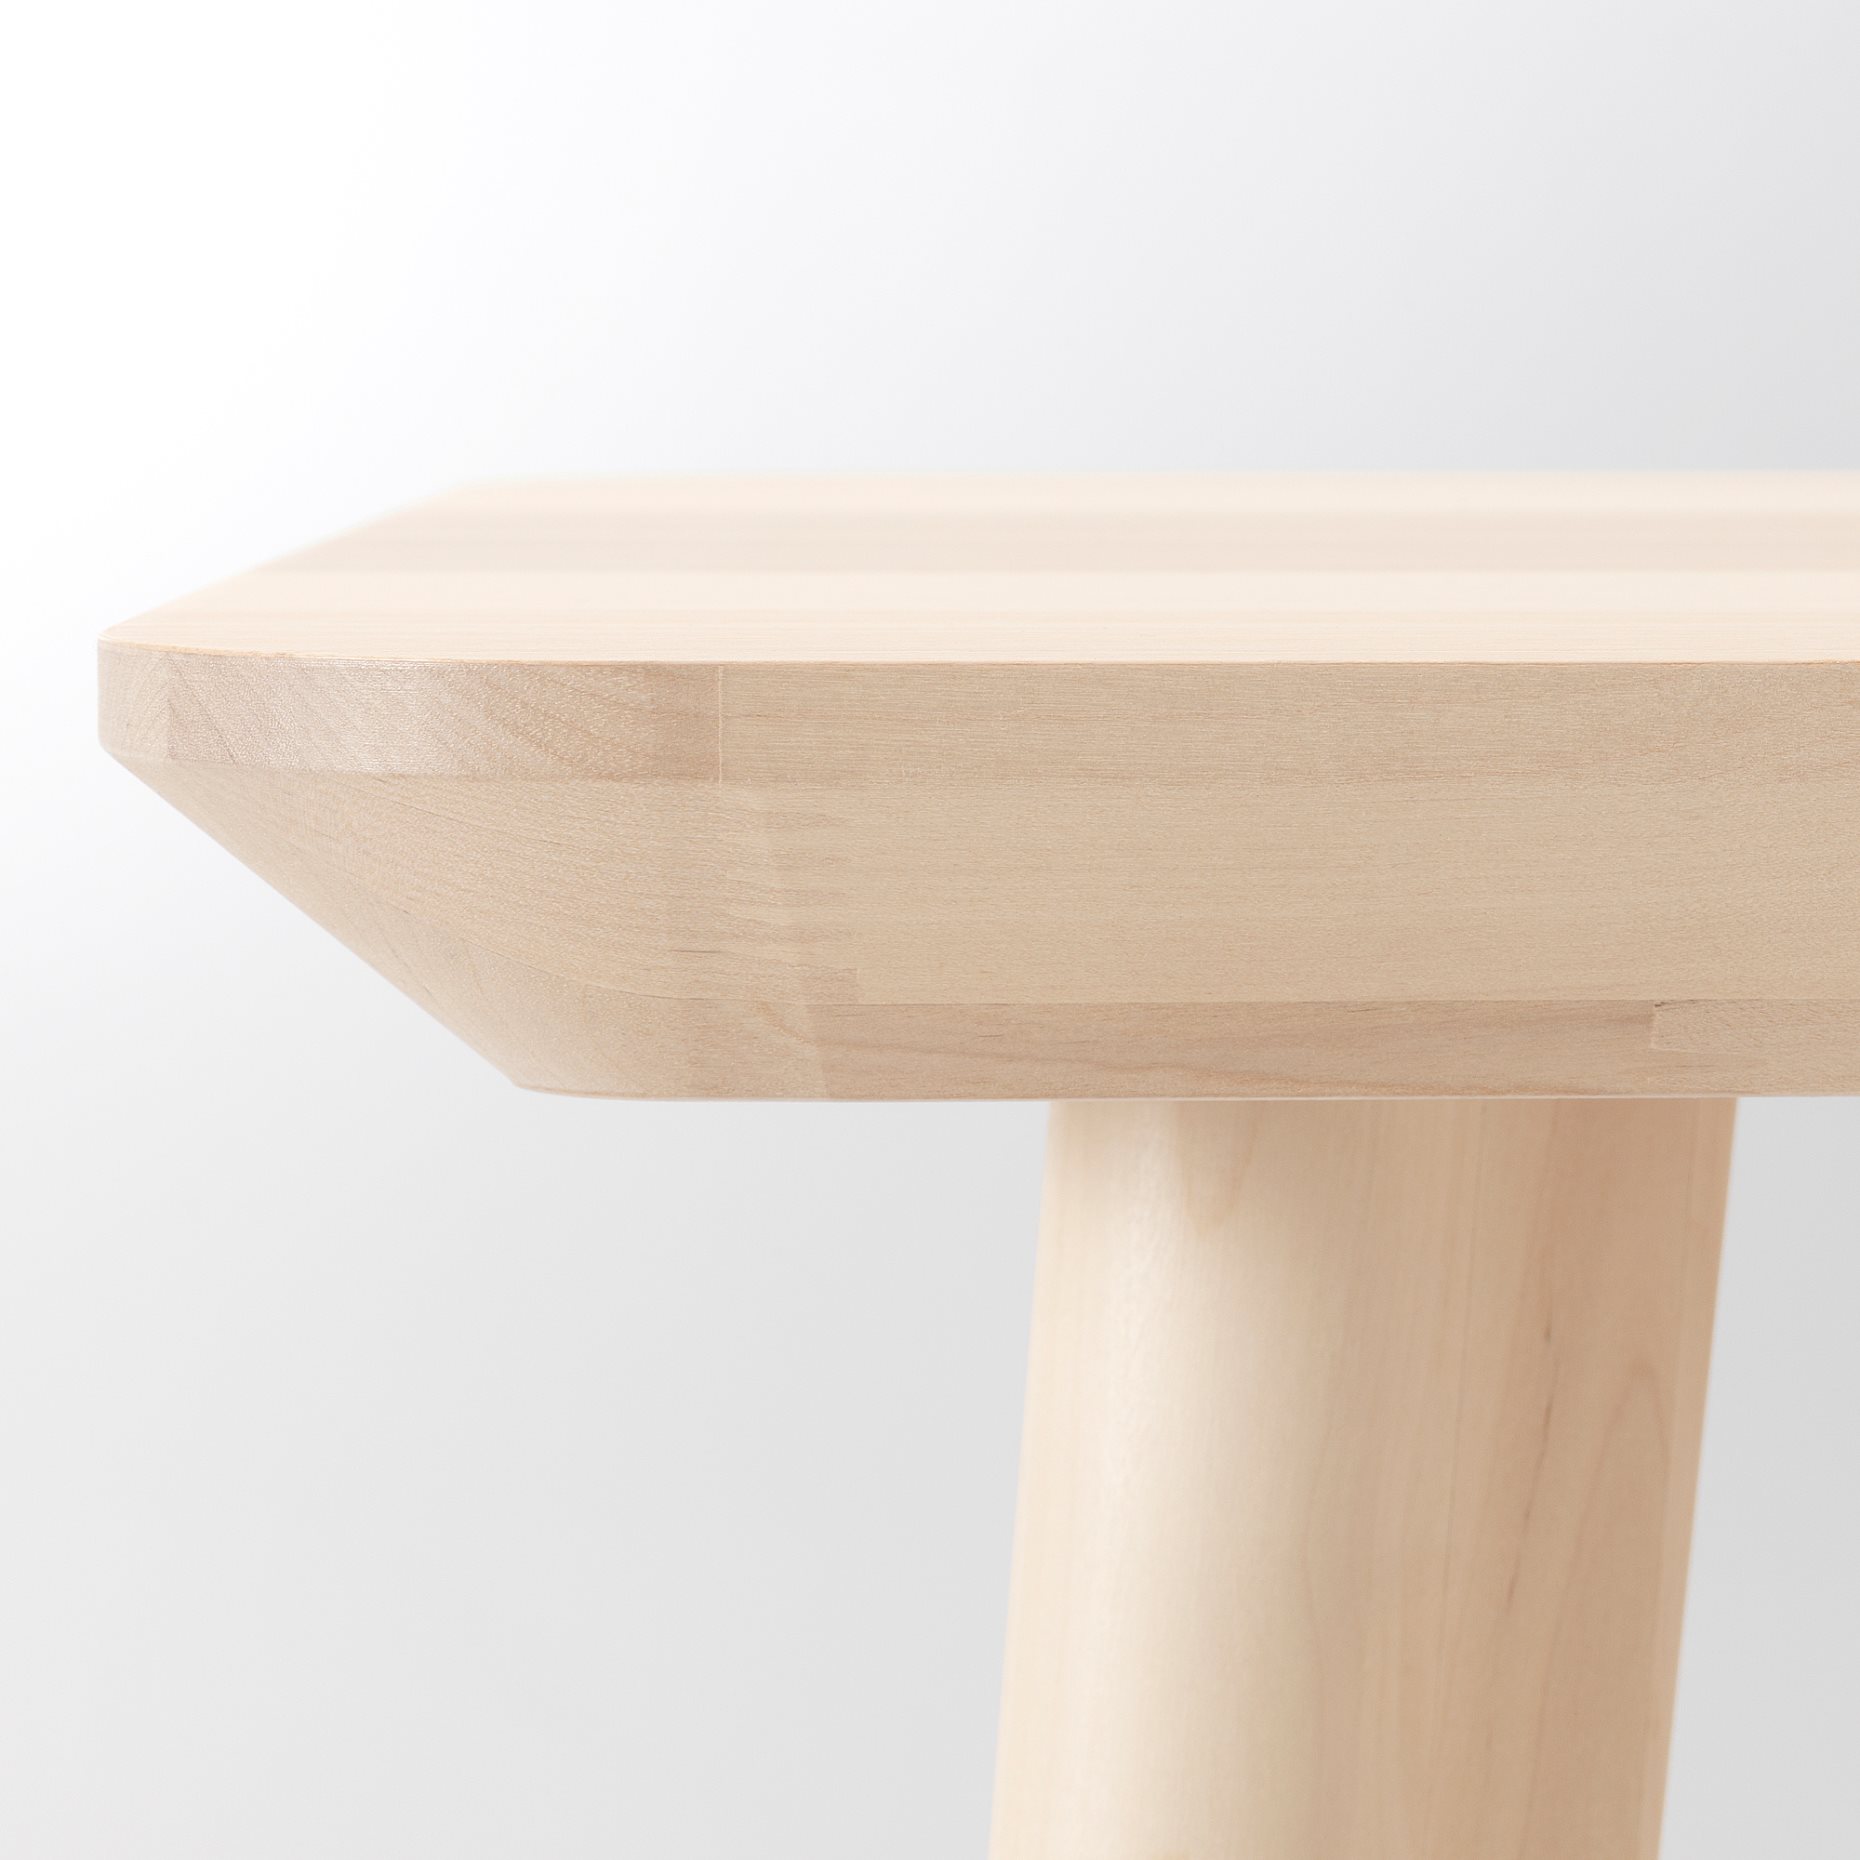 LISABO/IDOLF, τραπέζι και 4 καρέκλες, 991.614.85